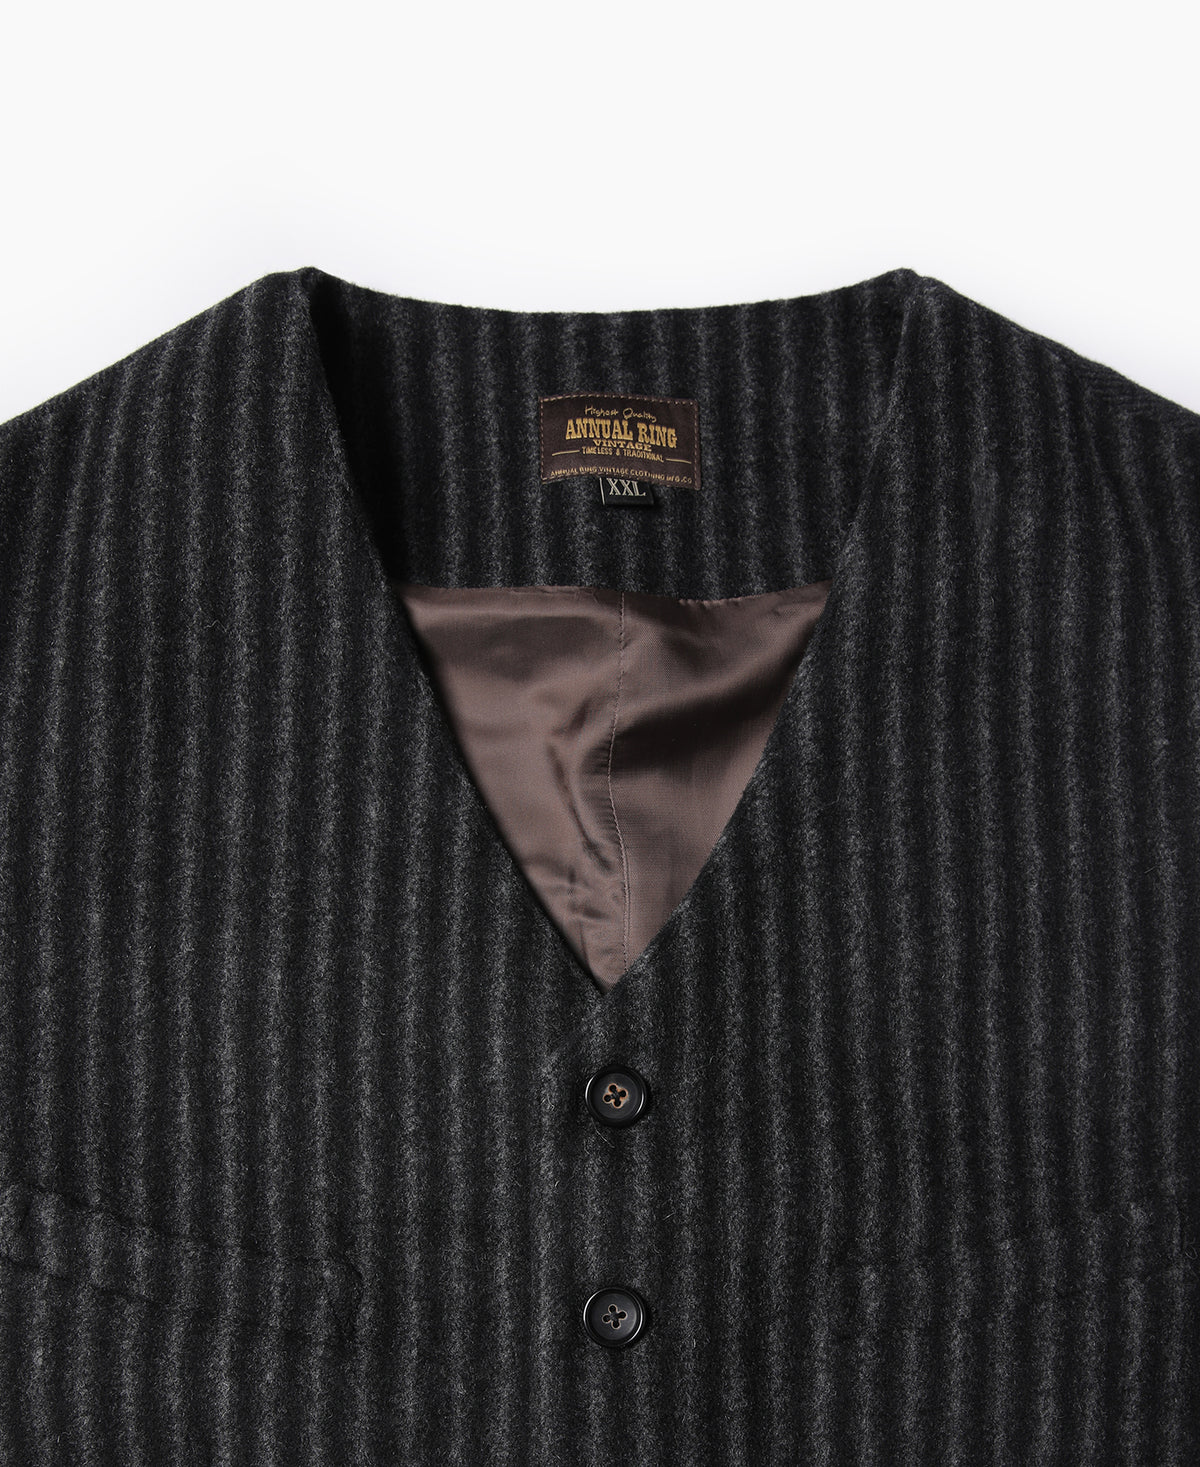 Black &amp; White Striped Tweed Vest